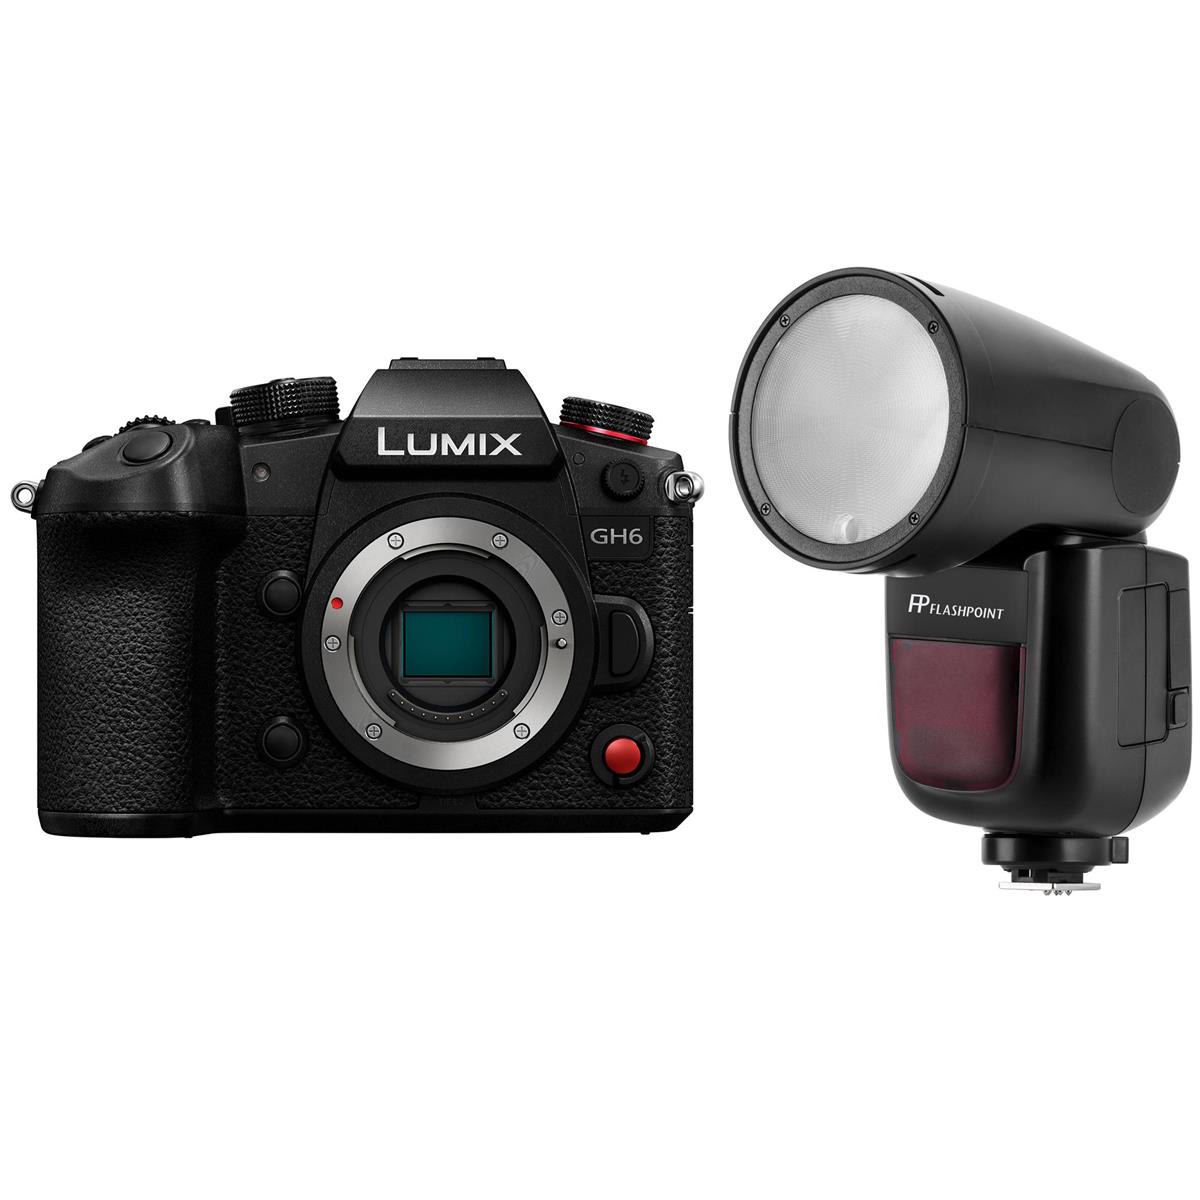 Image of Panasonic Lumix GH6 Mirrorless Camera Body with Flash Kit